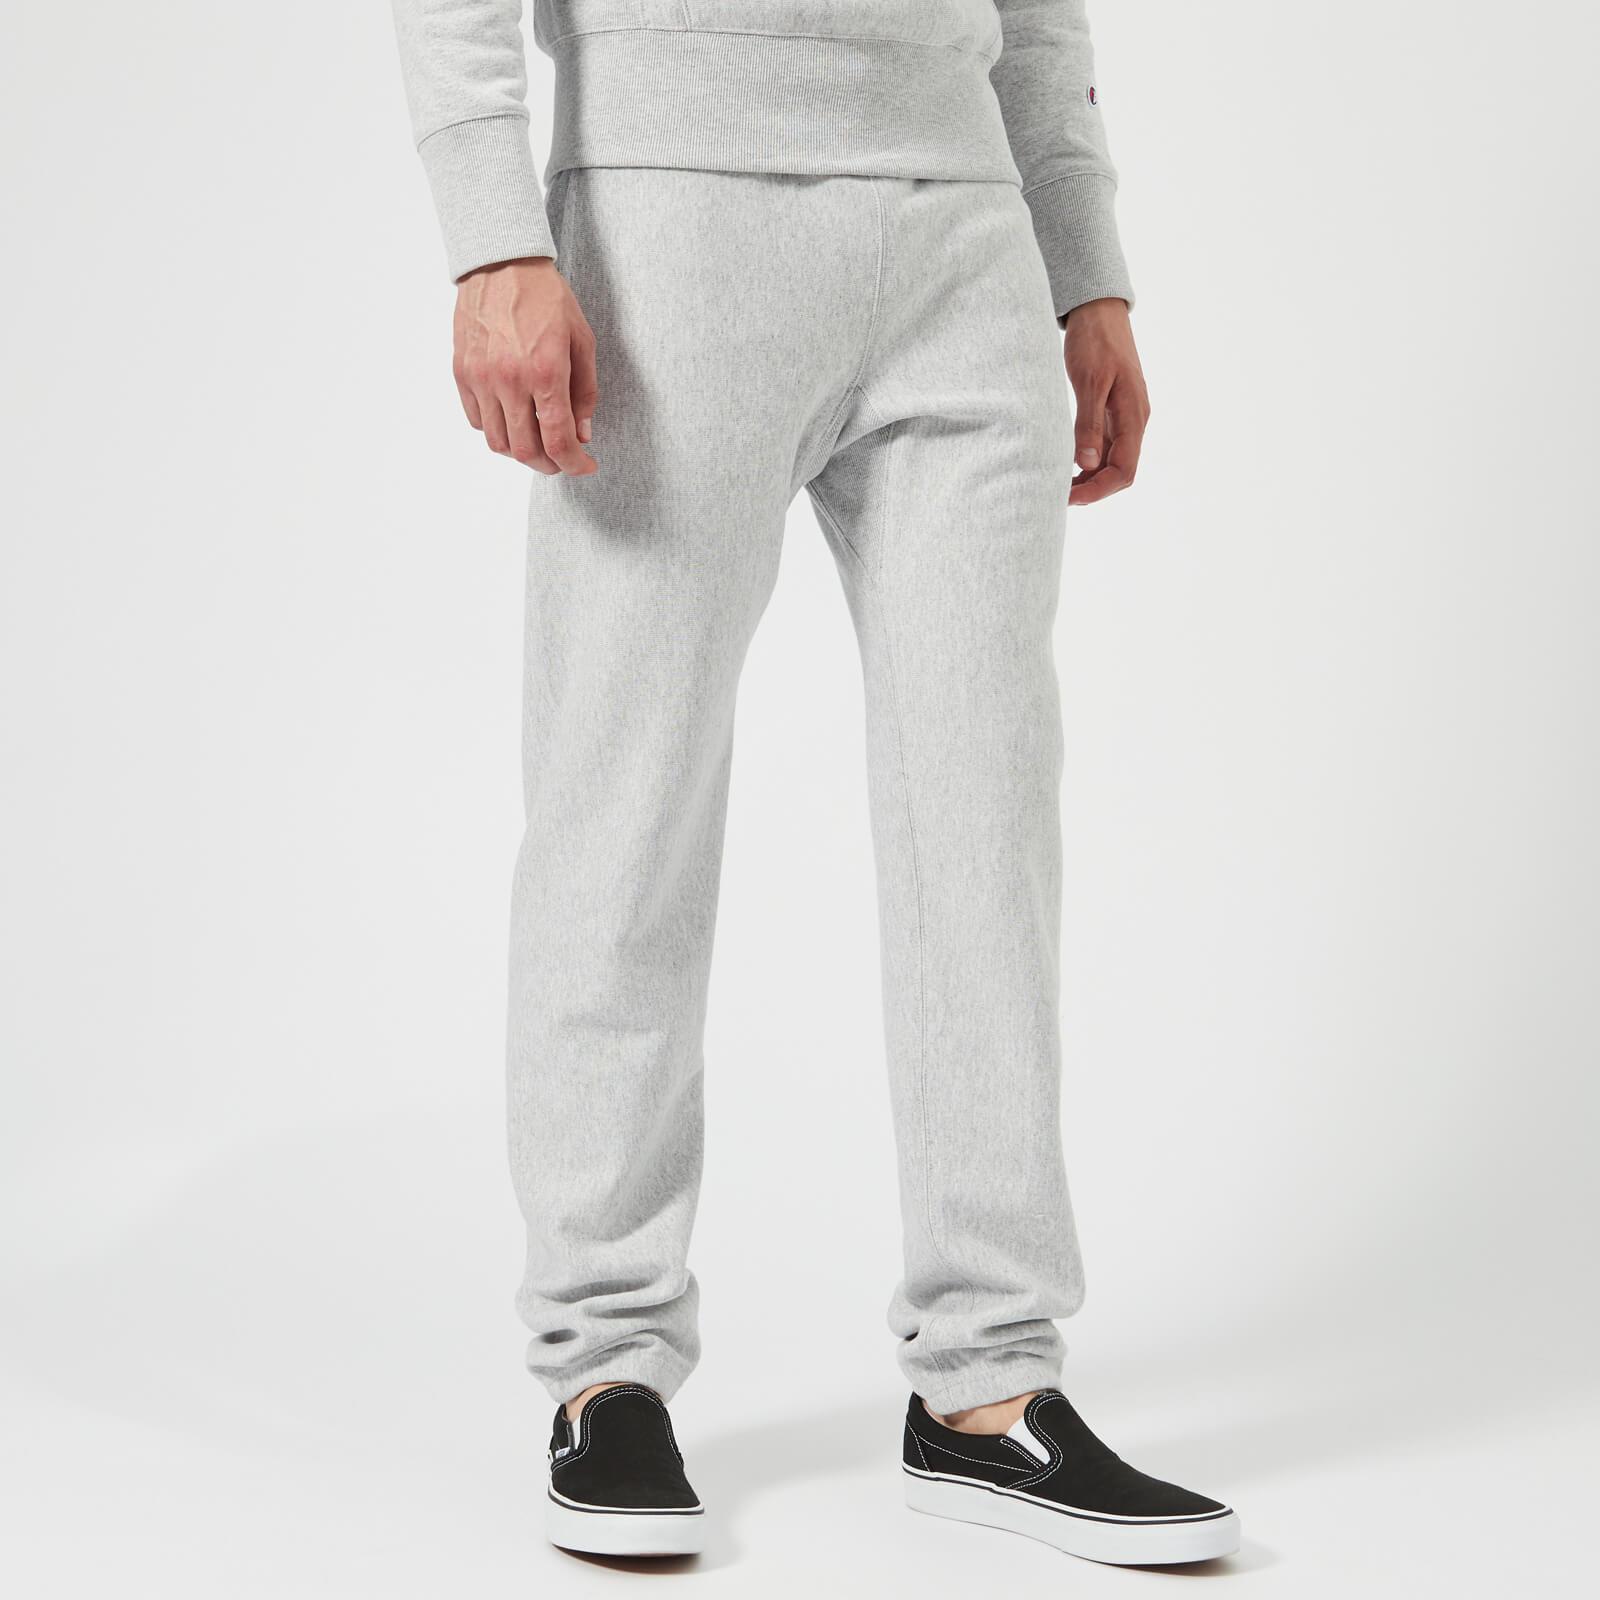 Champion Cotton Elastic Cuff Sweatpants in Grey (Gray) for Men - Lyst